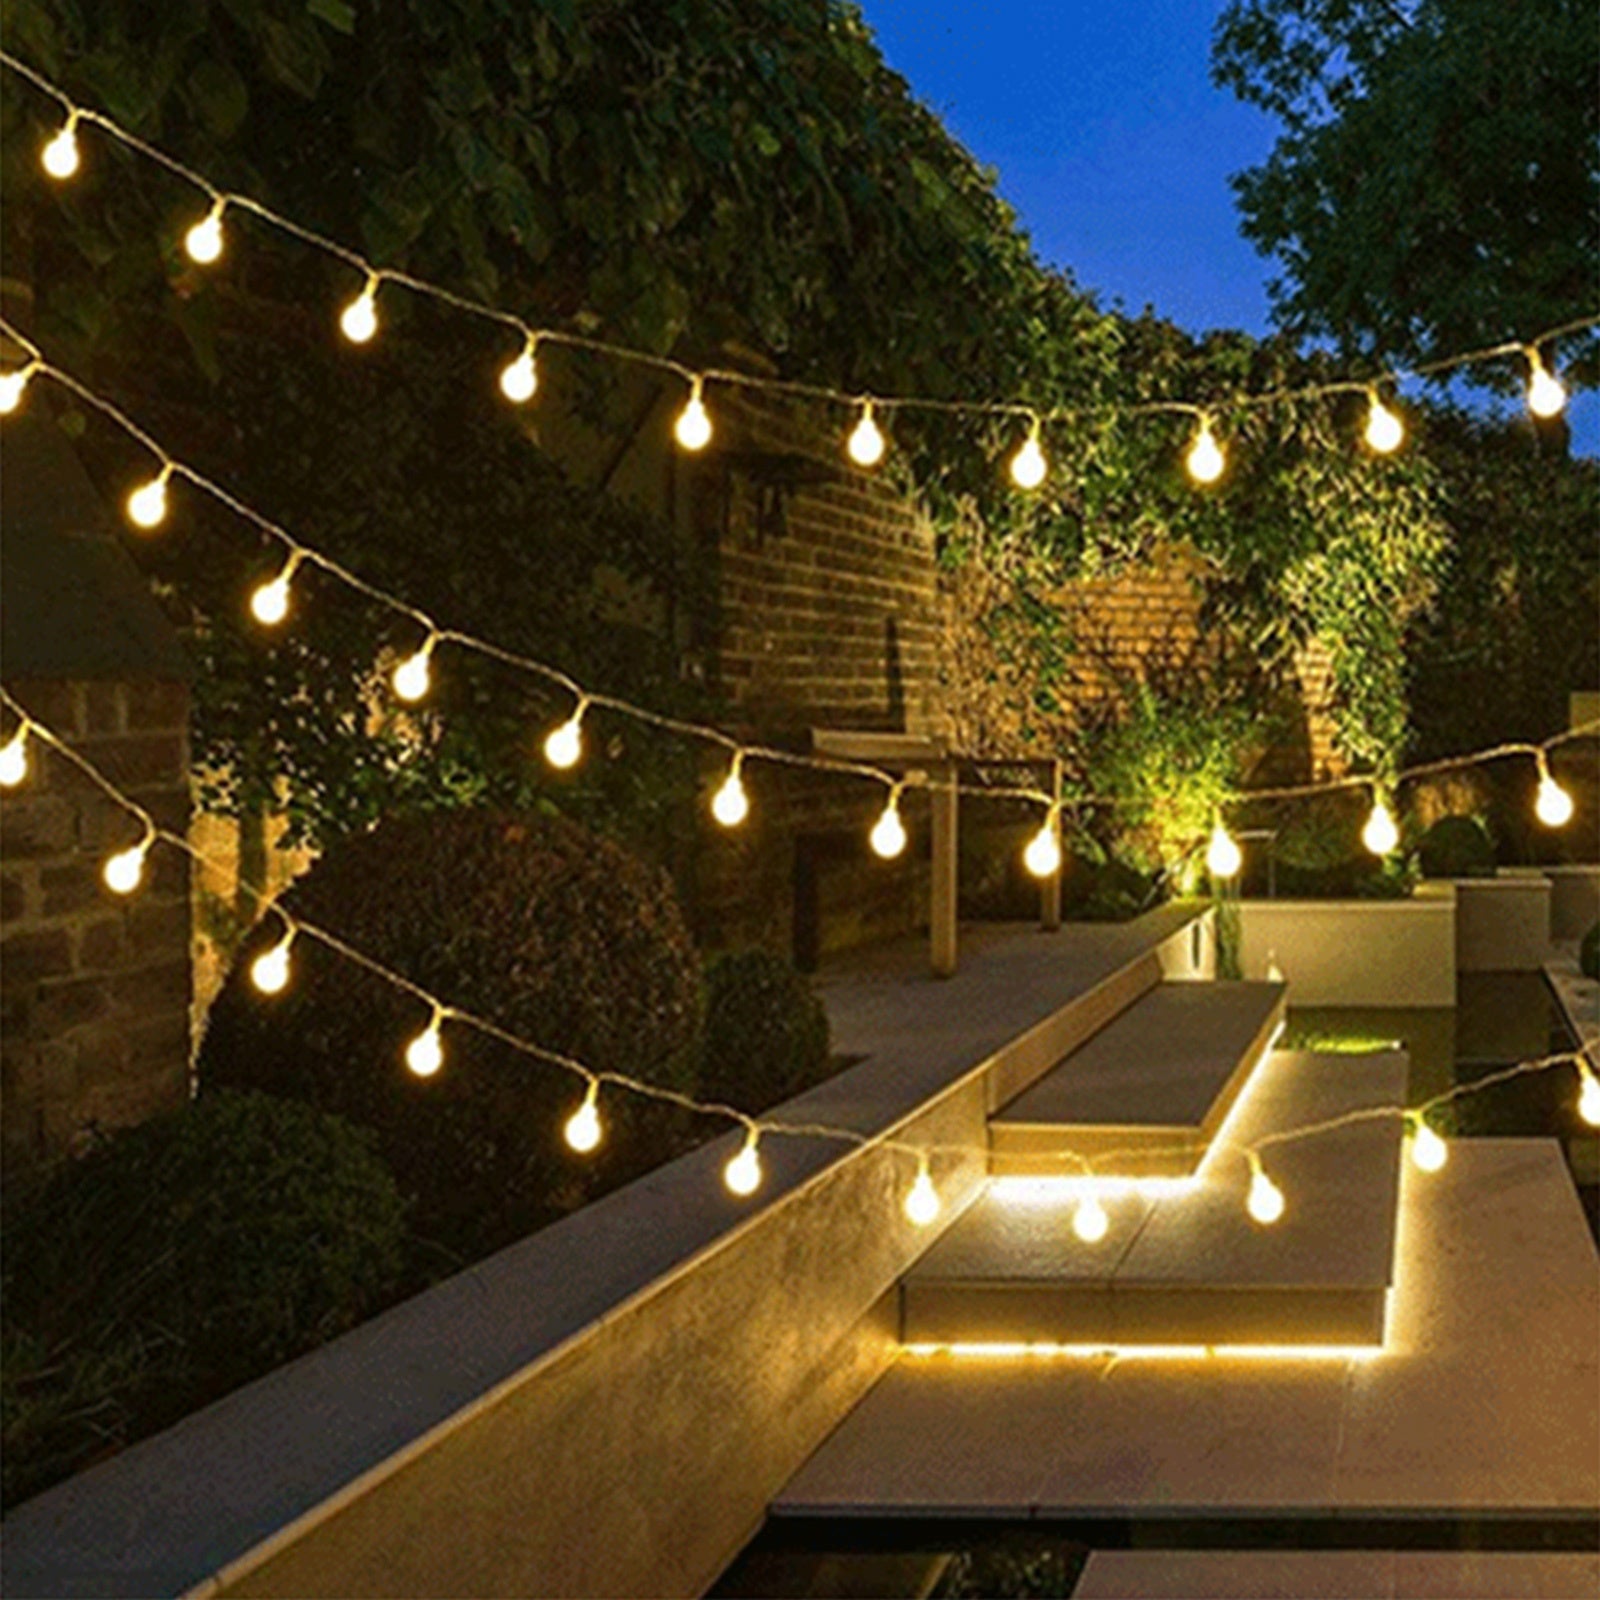 Sansai 10 Bulbs 14M Festoon String Lights LED Waterproof Outdoor Christmas Party Deals499